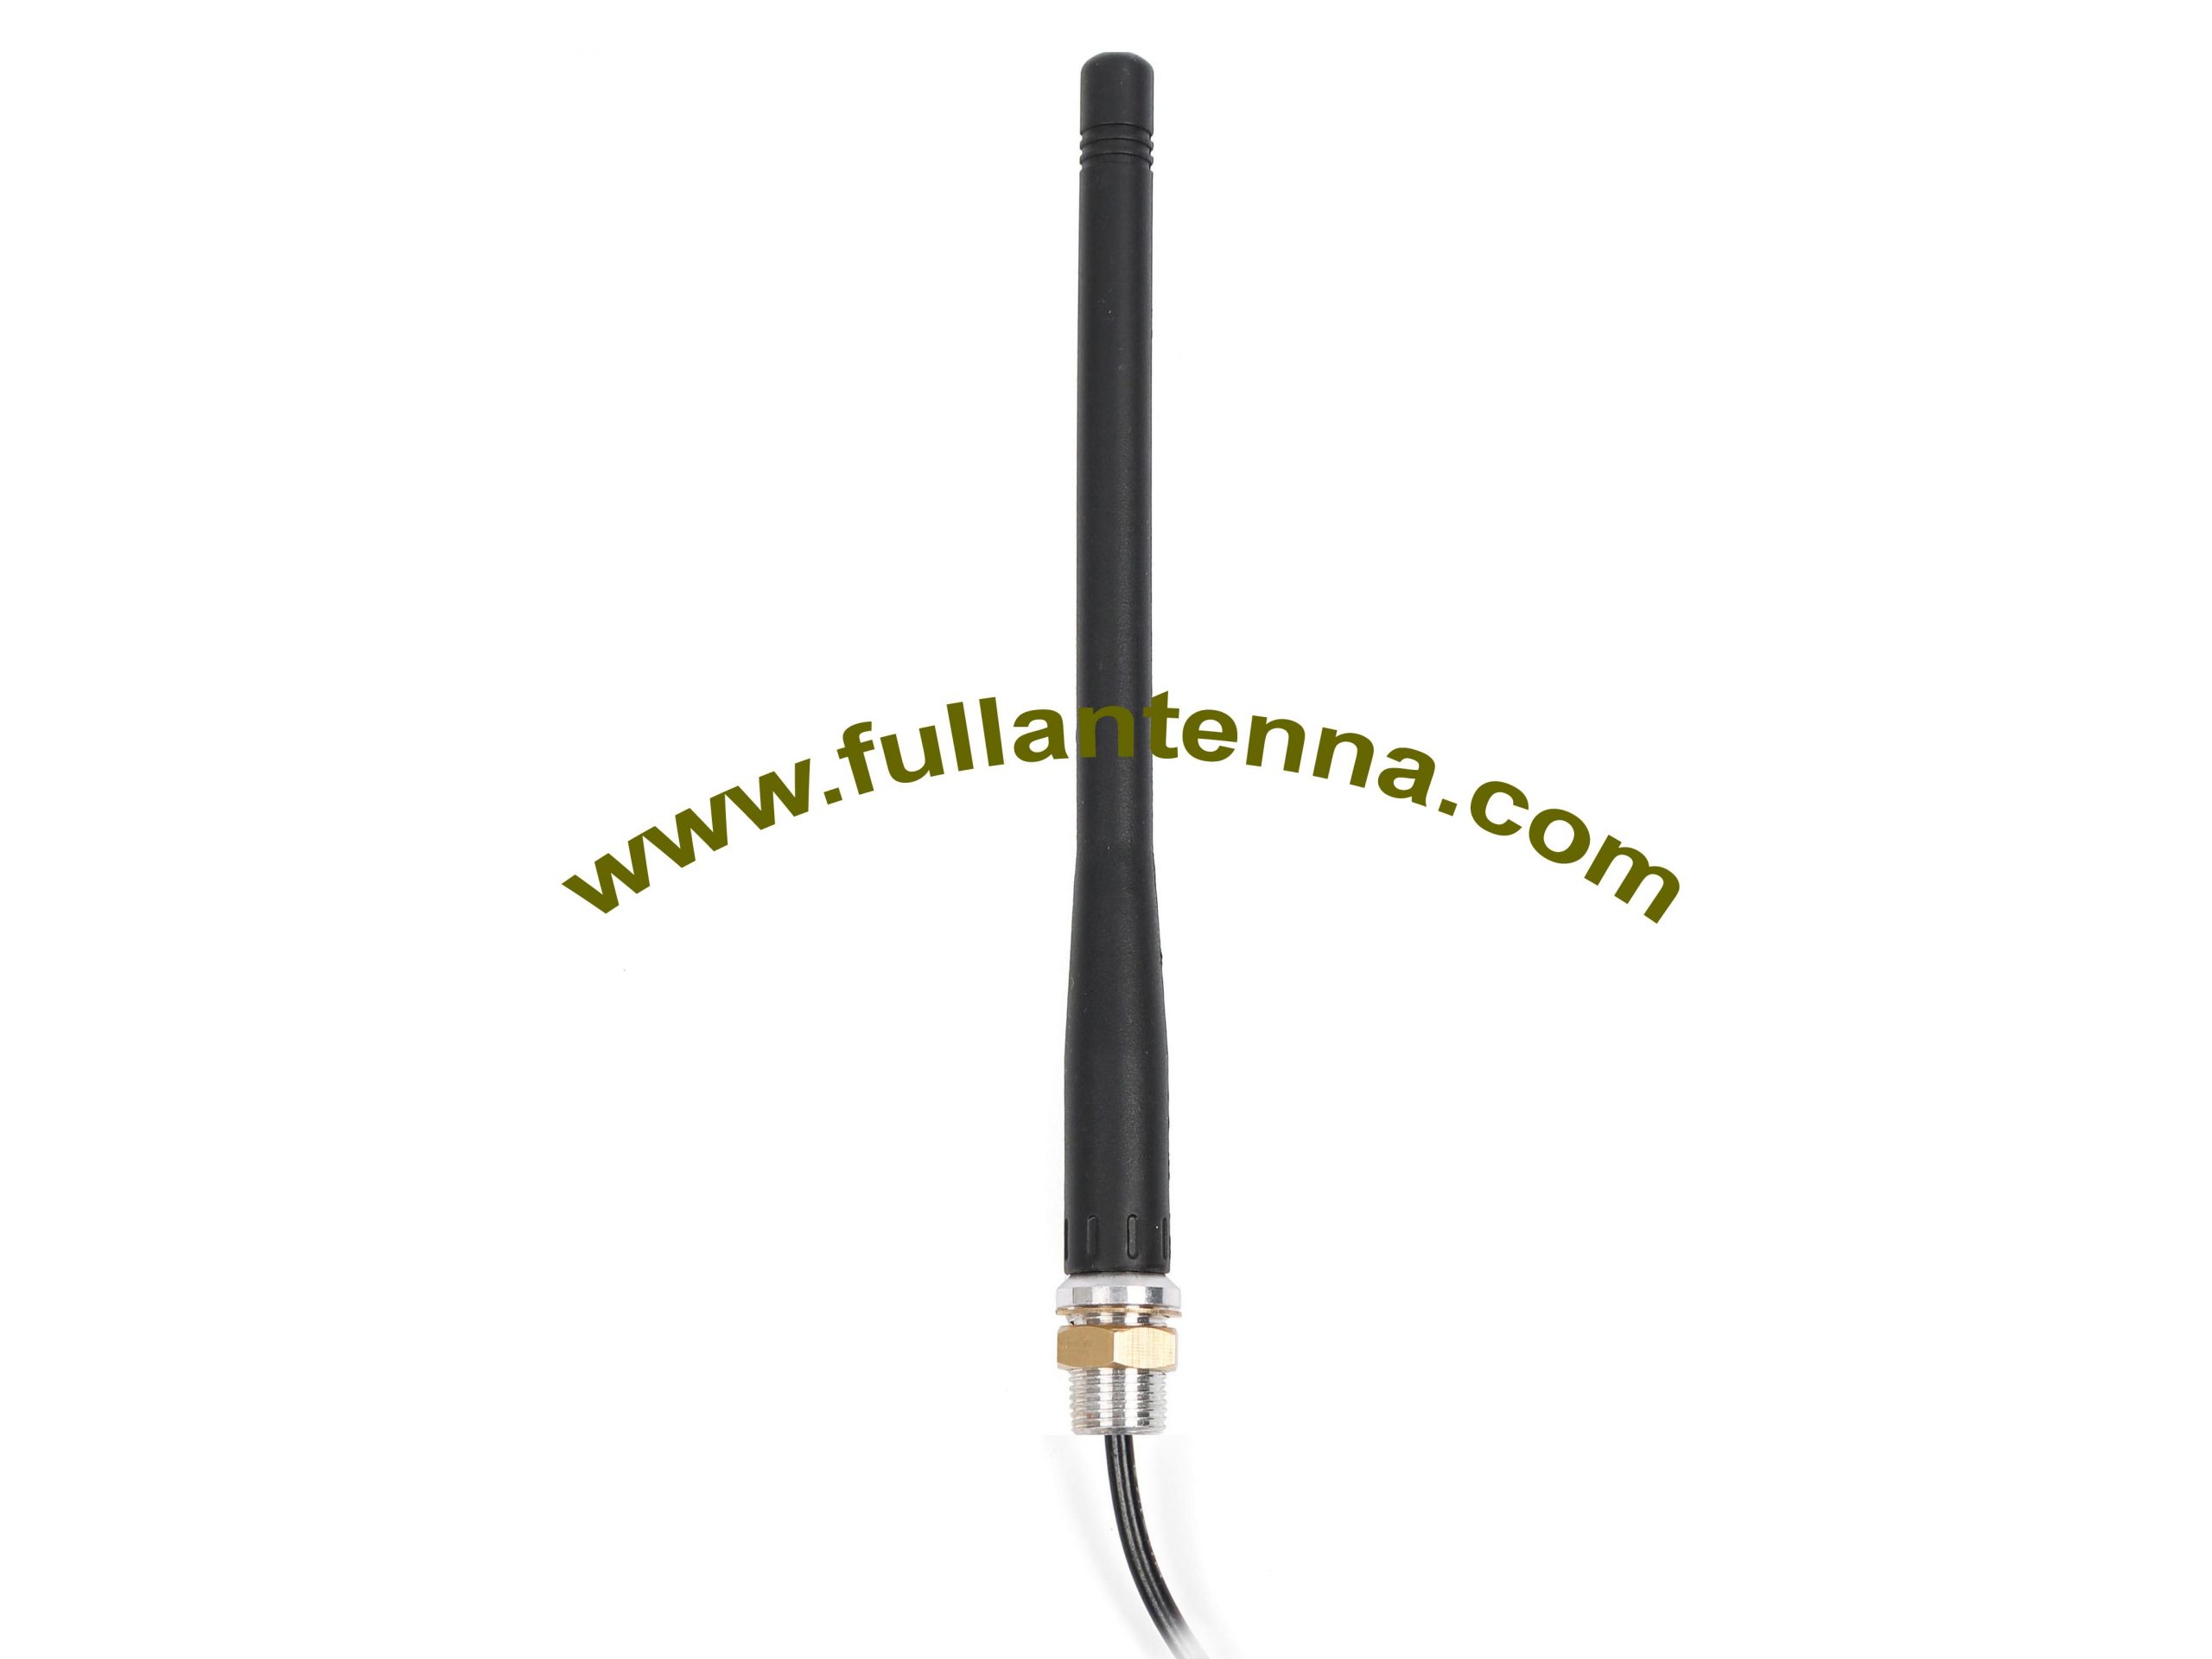 One of Hottest for 4g Lte Antenna - P/N:FALTE.0303Screw,4G/LTE External Antenna,LTE/4G antenna rubber whip screw mount – Fullantenna